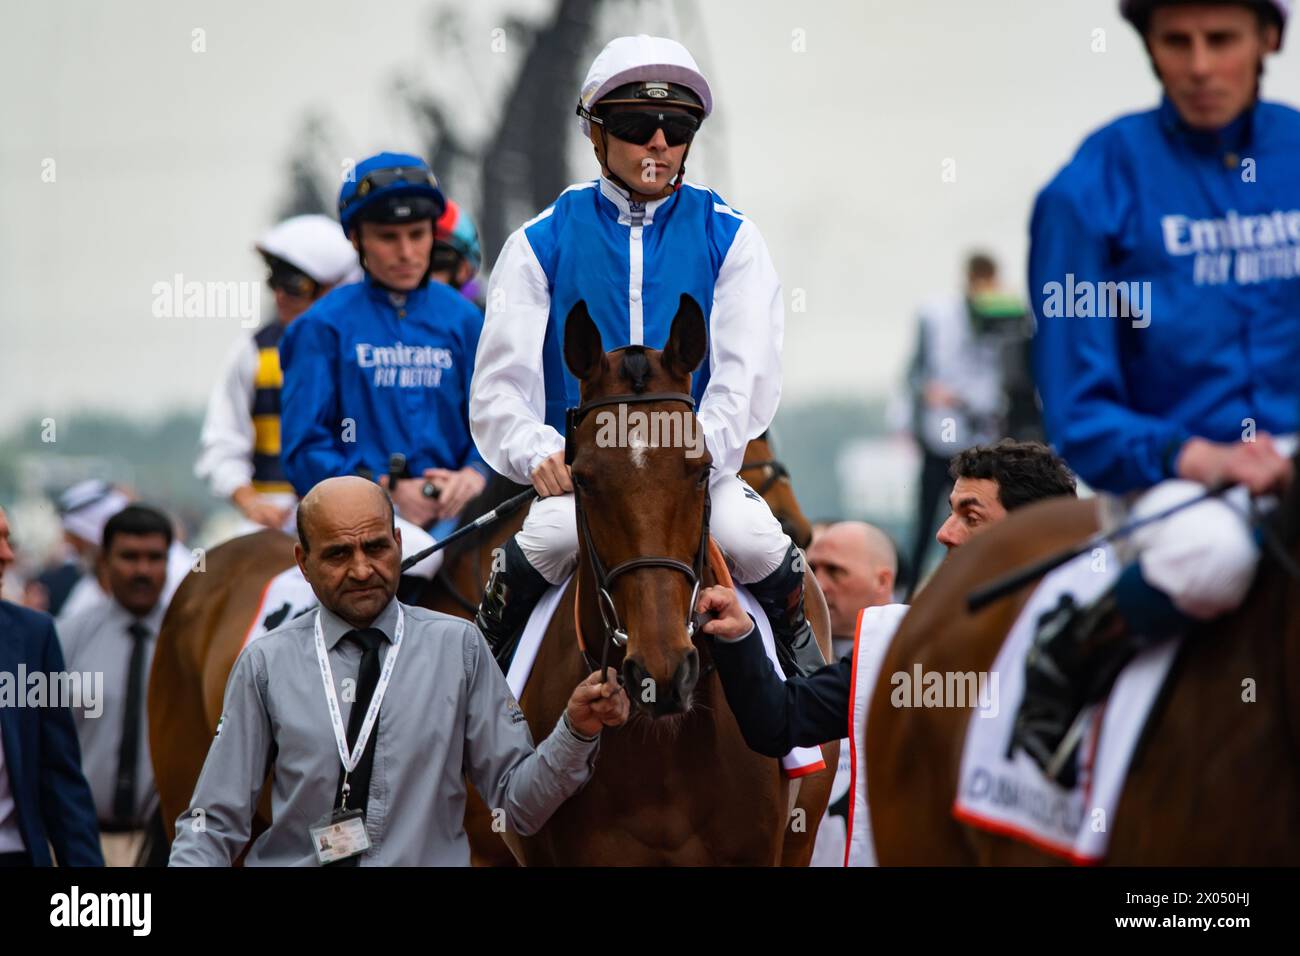 Sober und Maxime Guyon starten den Dubai Gold Cup auf der Meydan Racecourse, Dubai, VAE, 24.03.30. Credit JTW equine Images / Alamy. Stockfoto